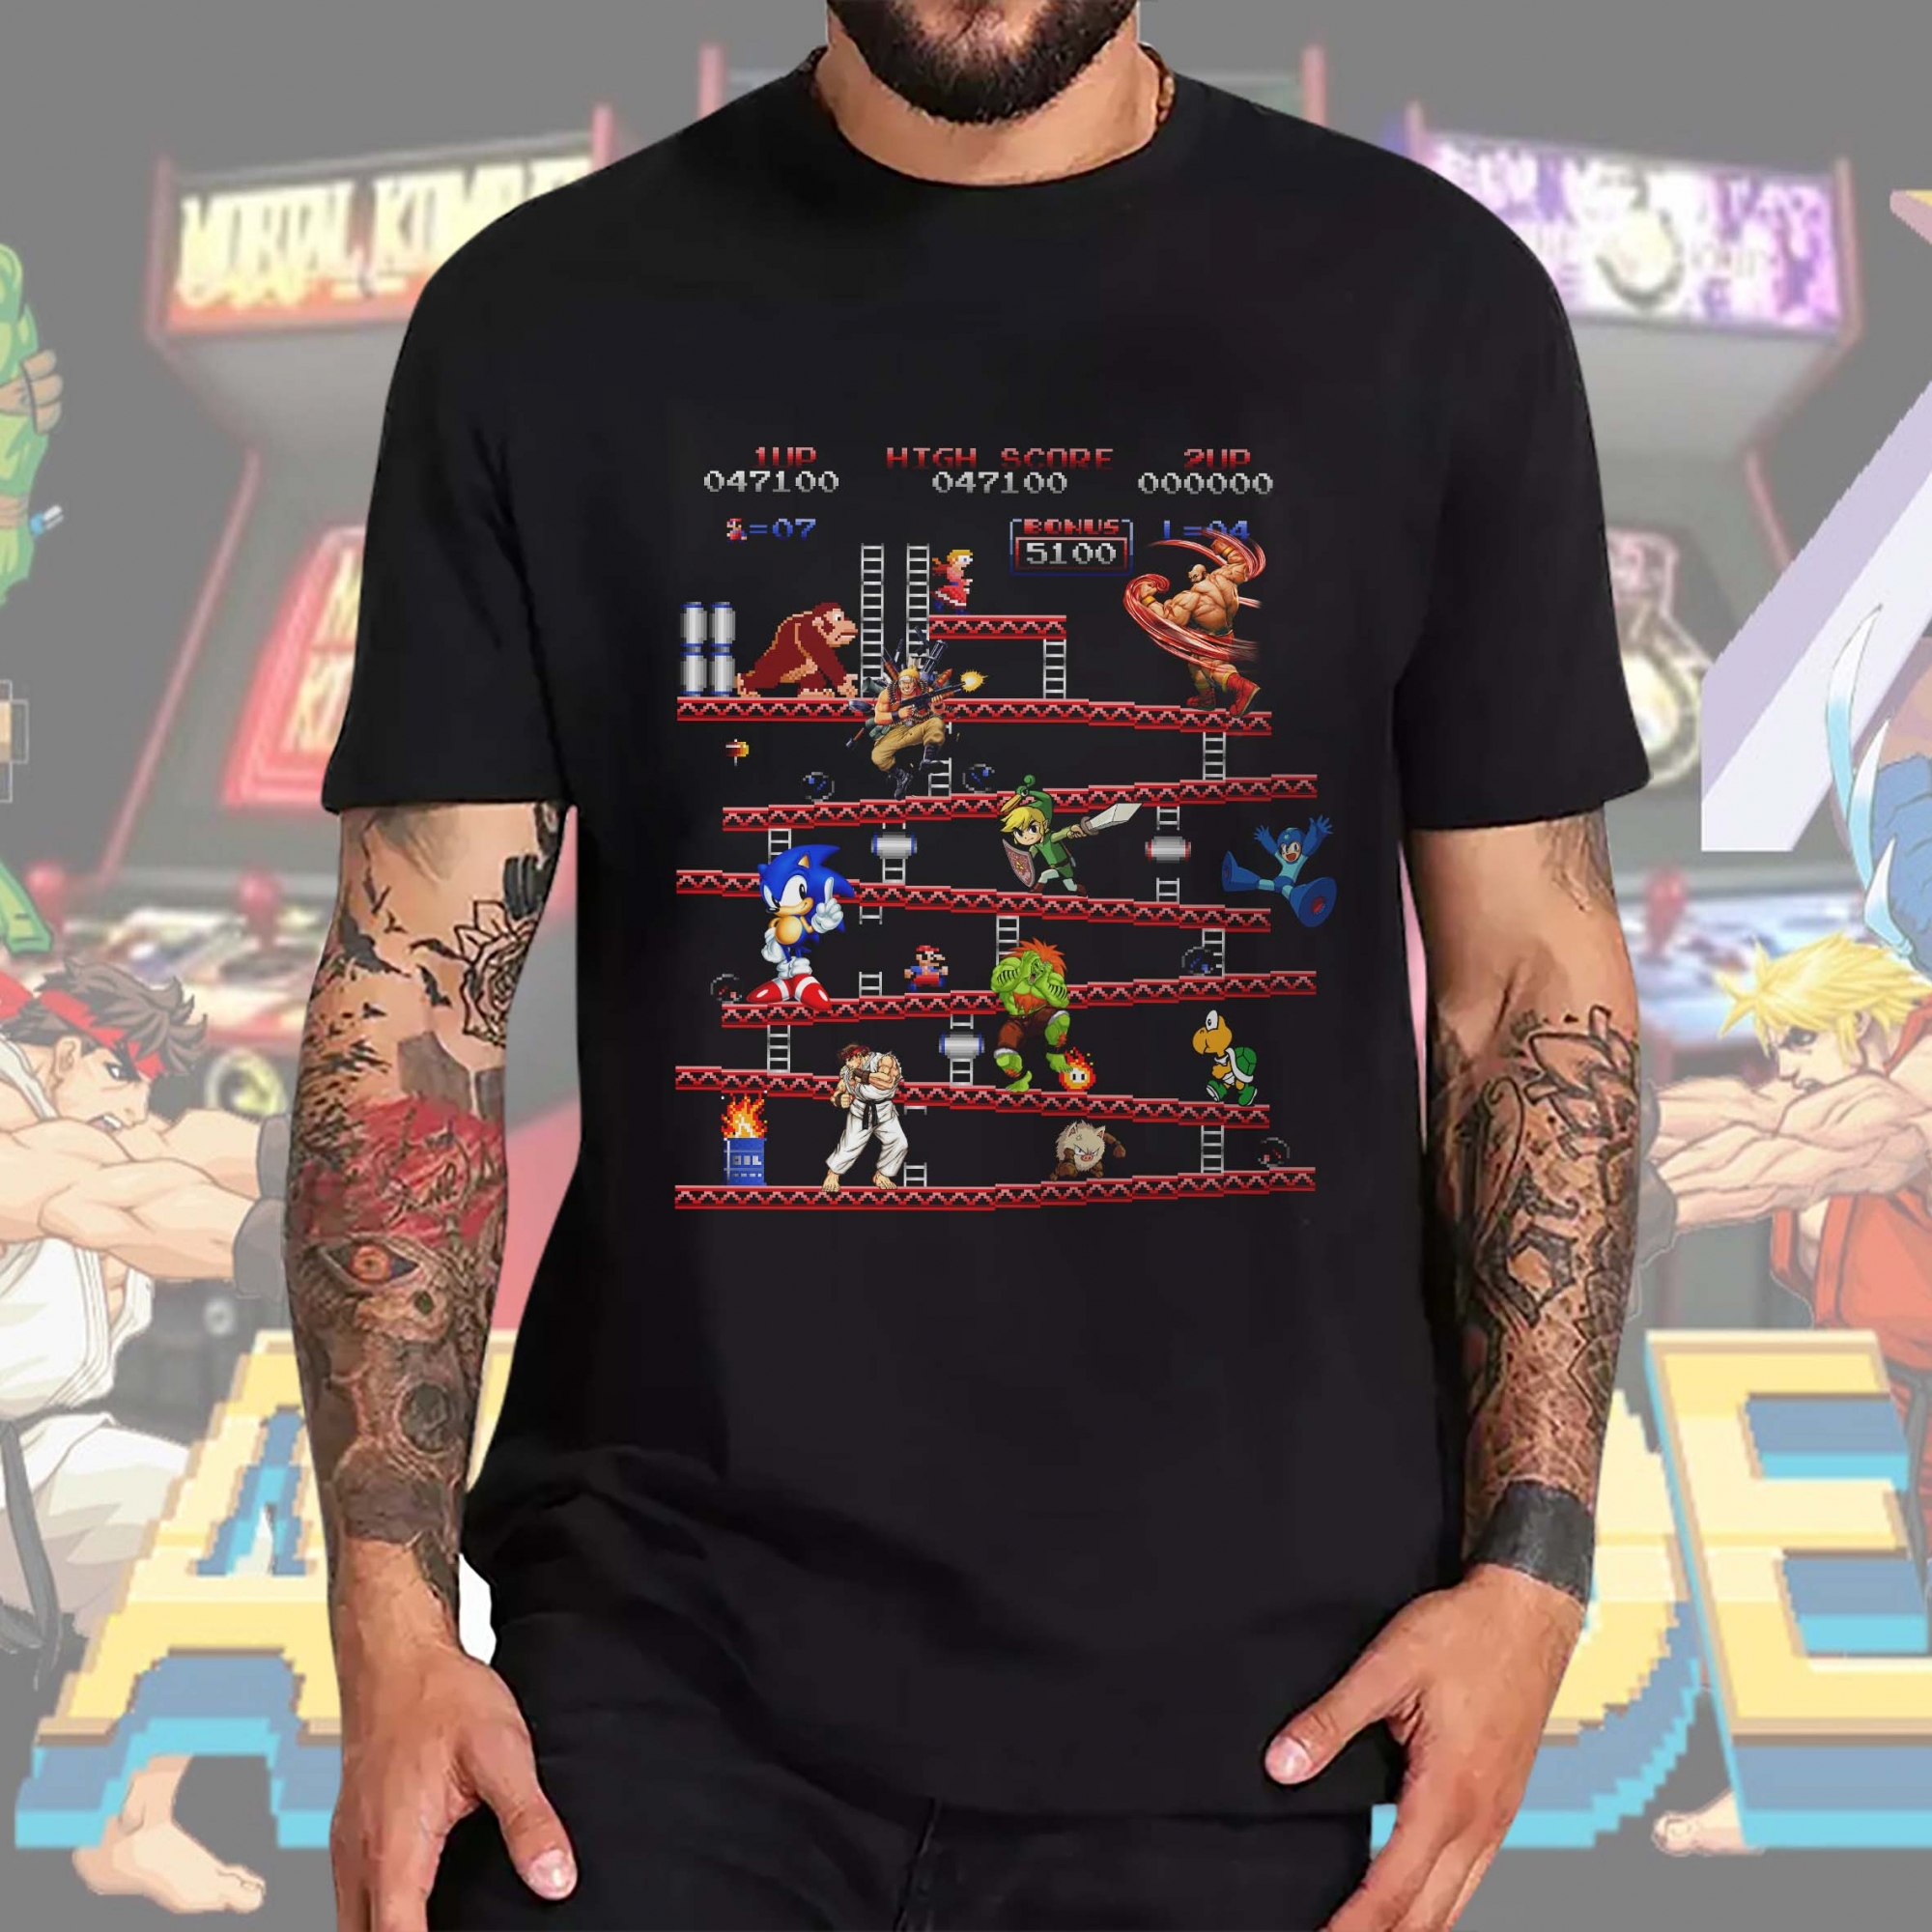 Camiseta Unissex Masculina Jogos Clássicos Nintendo Vídeo Game Arcade Donkey Kong Sonic (Preta)  Camisa Geek - CD